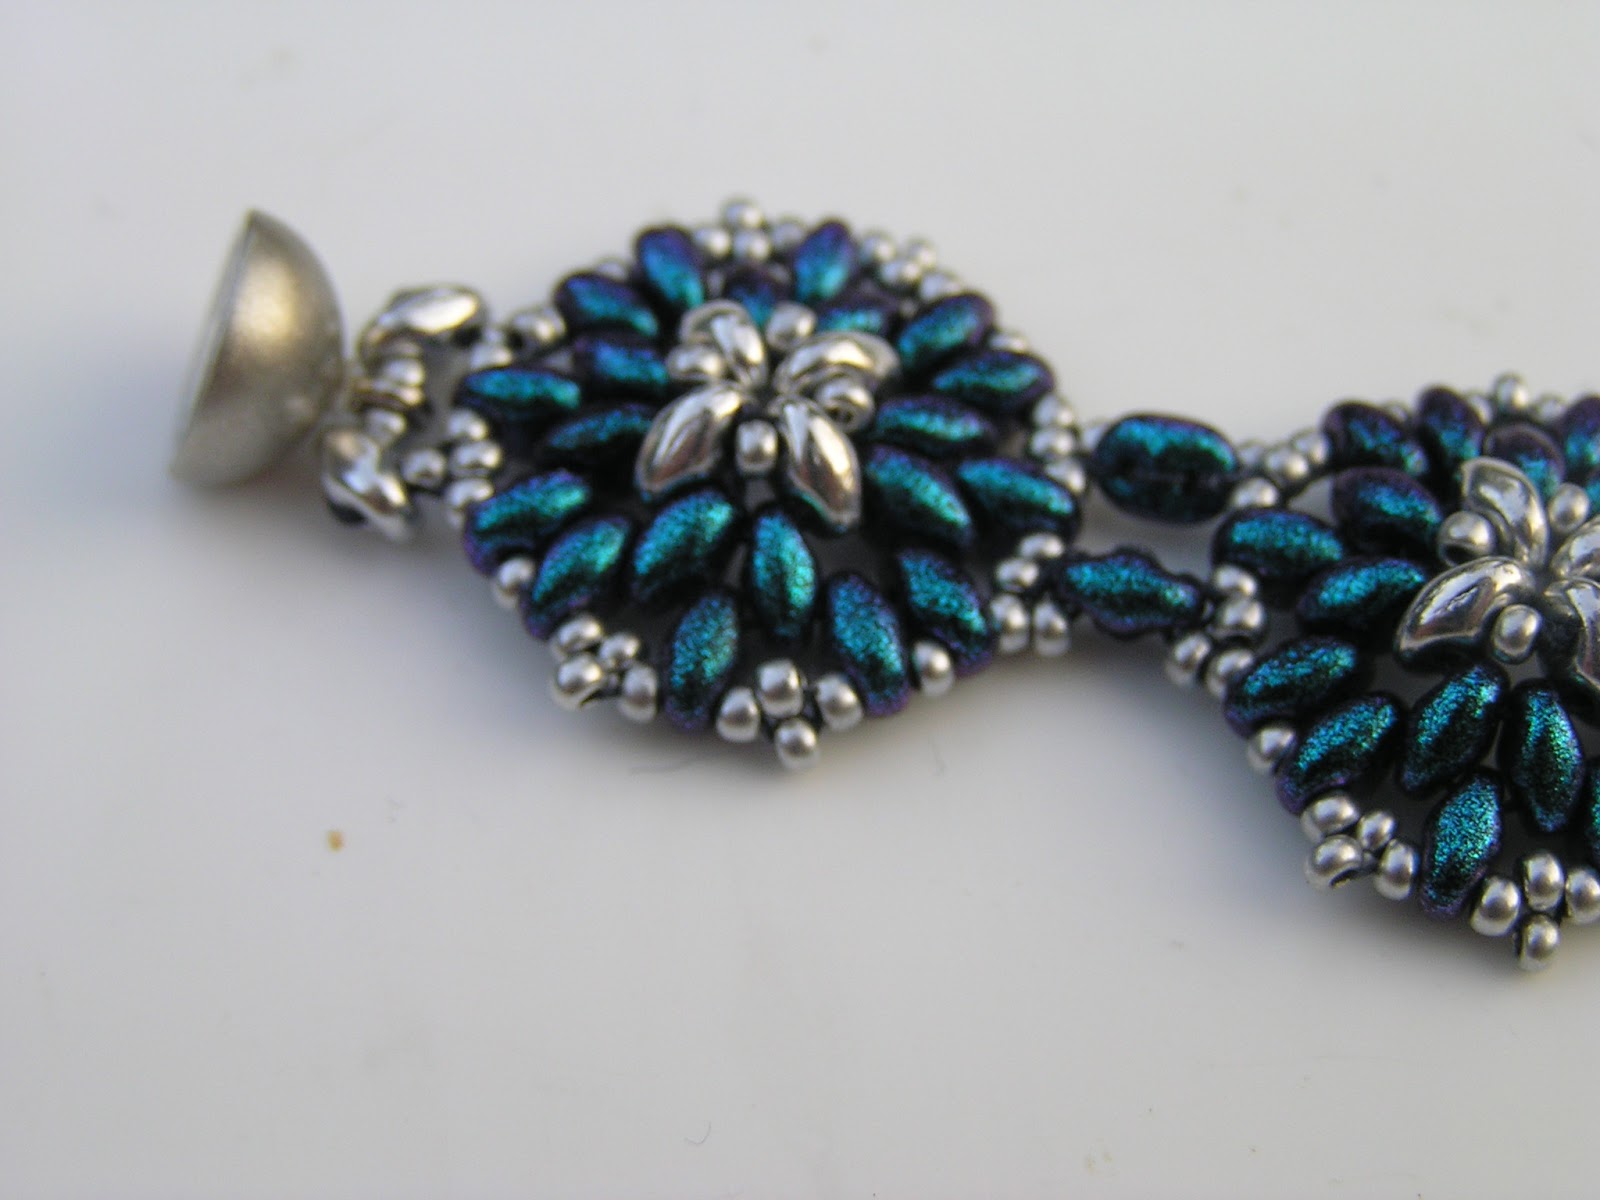 Catrina jewels: Bracele t& earrings "Diana" My new design